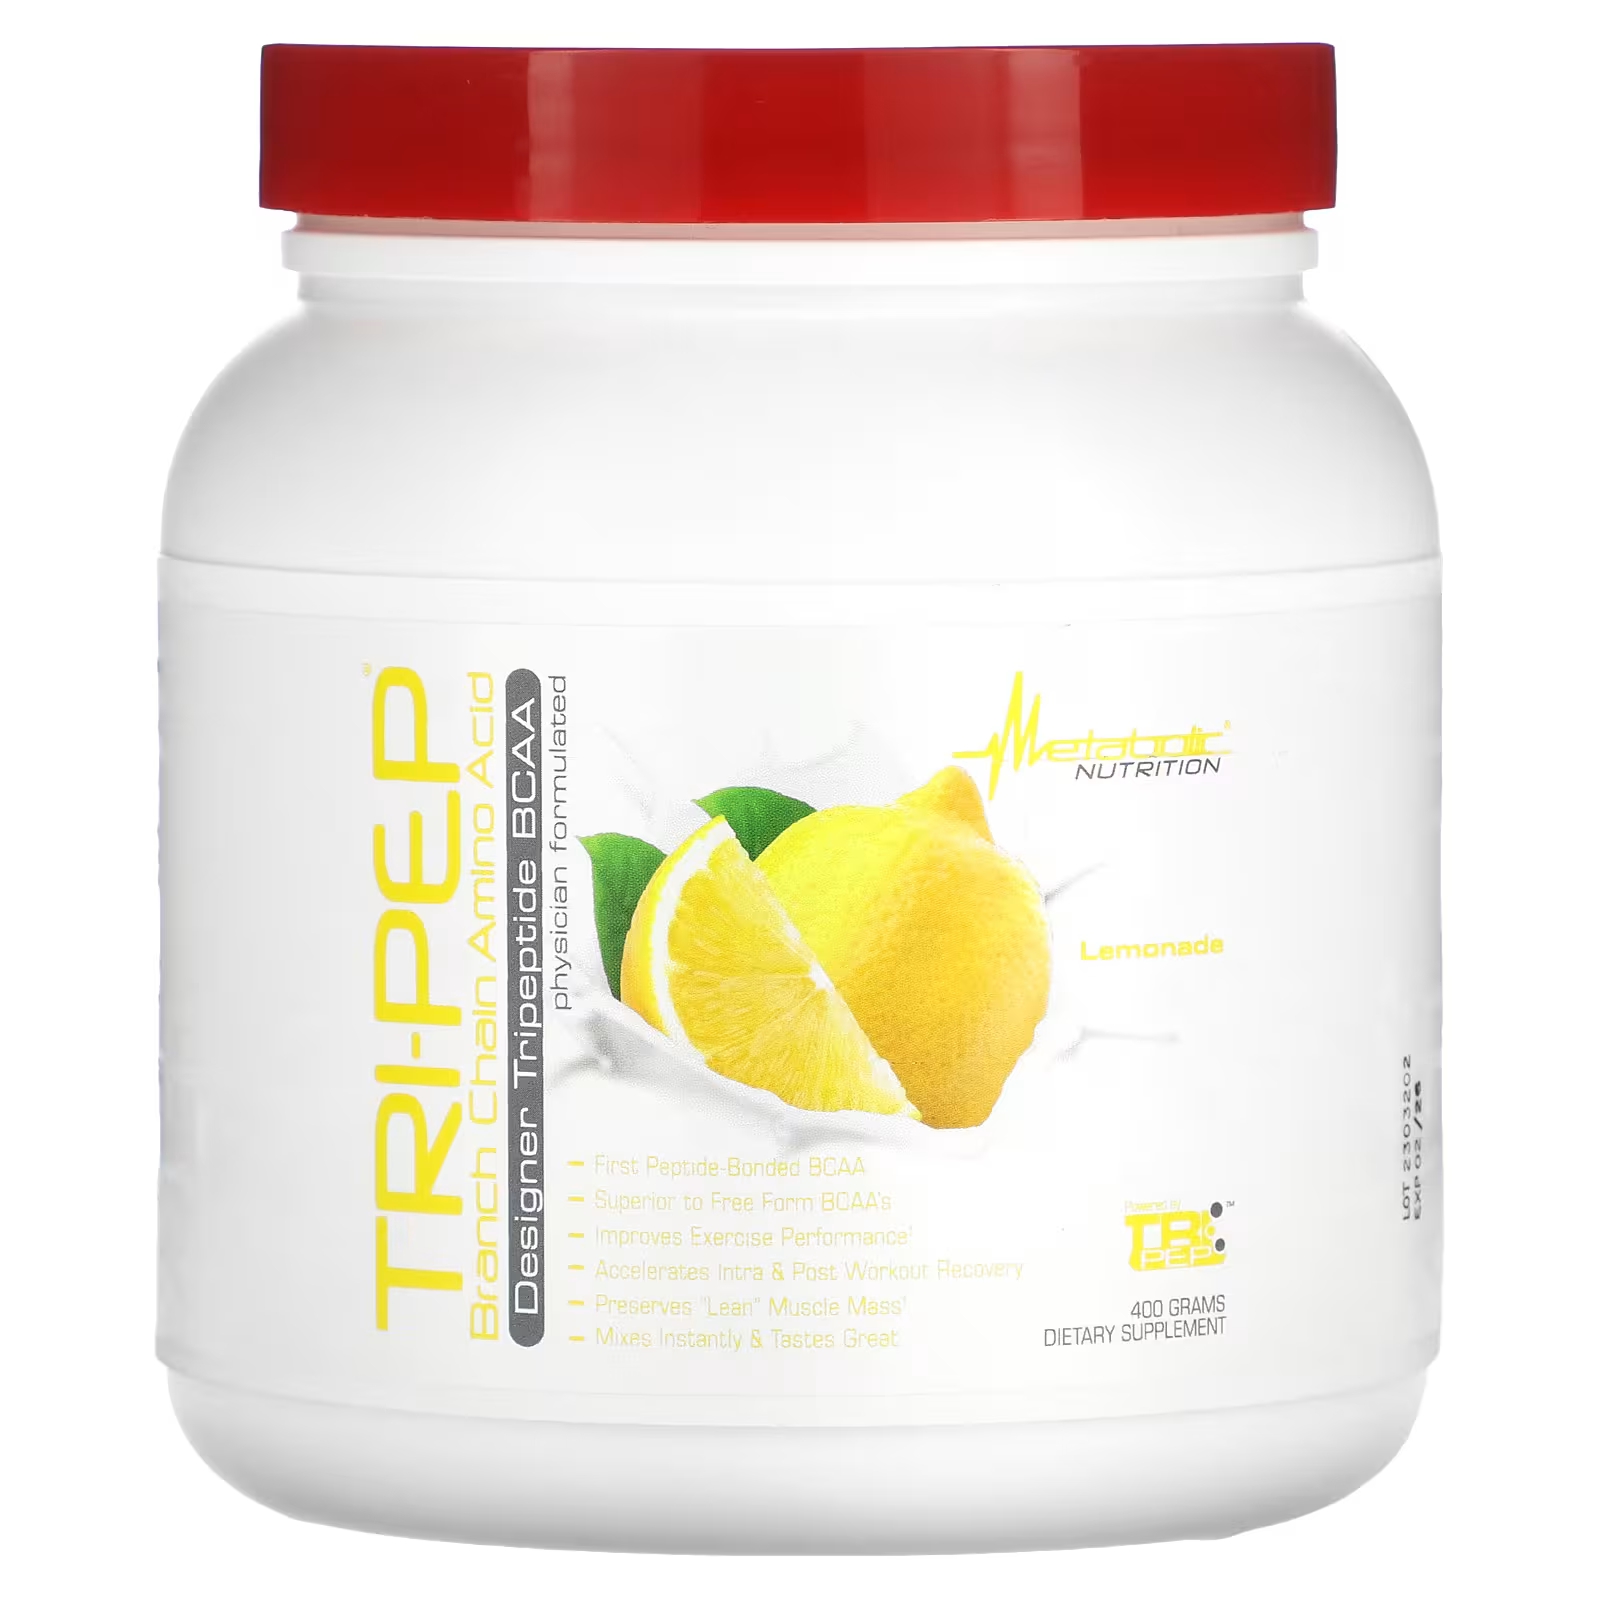 Аминокислотный лимонад Metabolic Nutrition Tri-Pep с разветвленной цепью metabolic nutrition tri pep лимонад 400 грамм